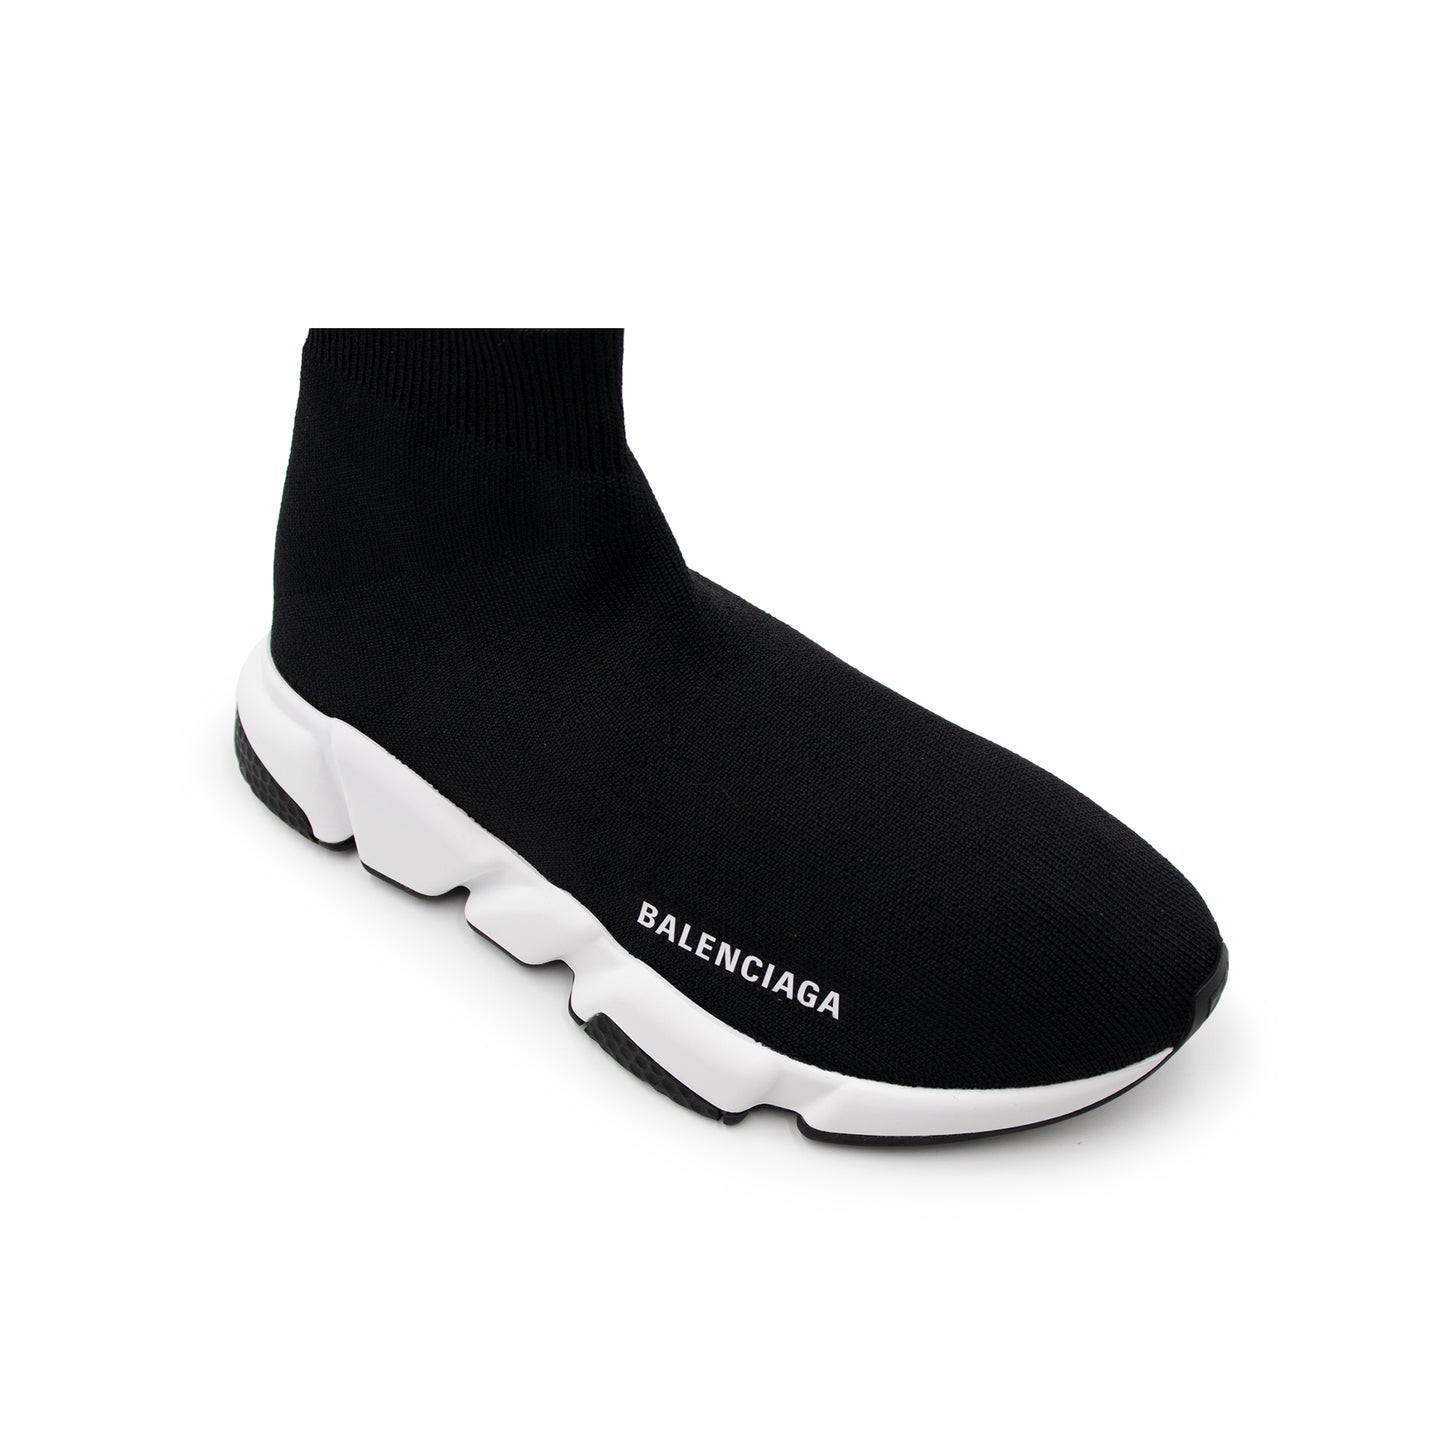 Speed Sneakers in Black/White